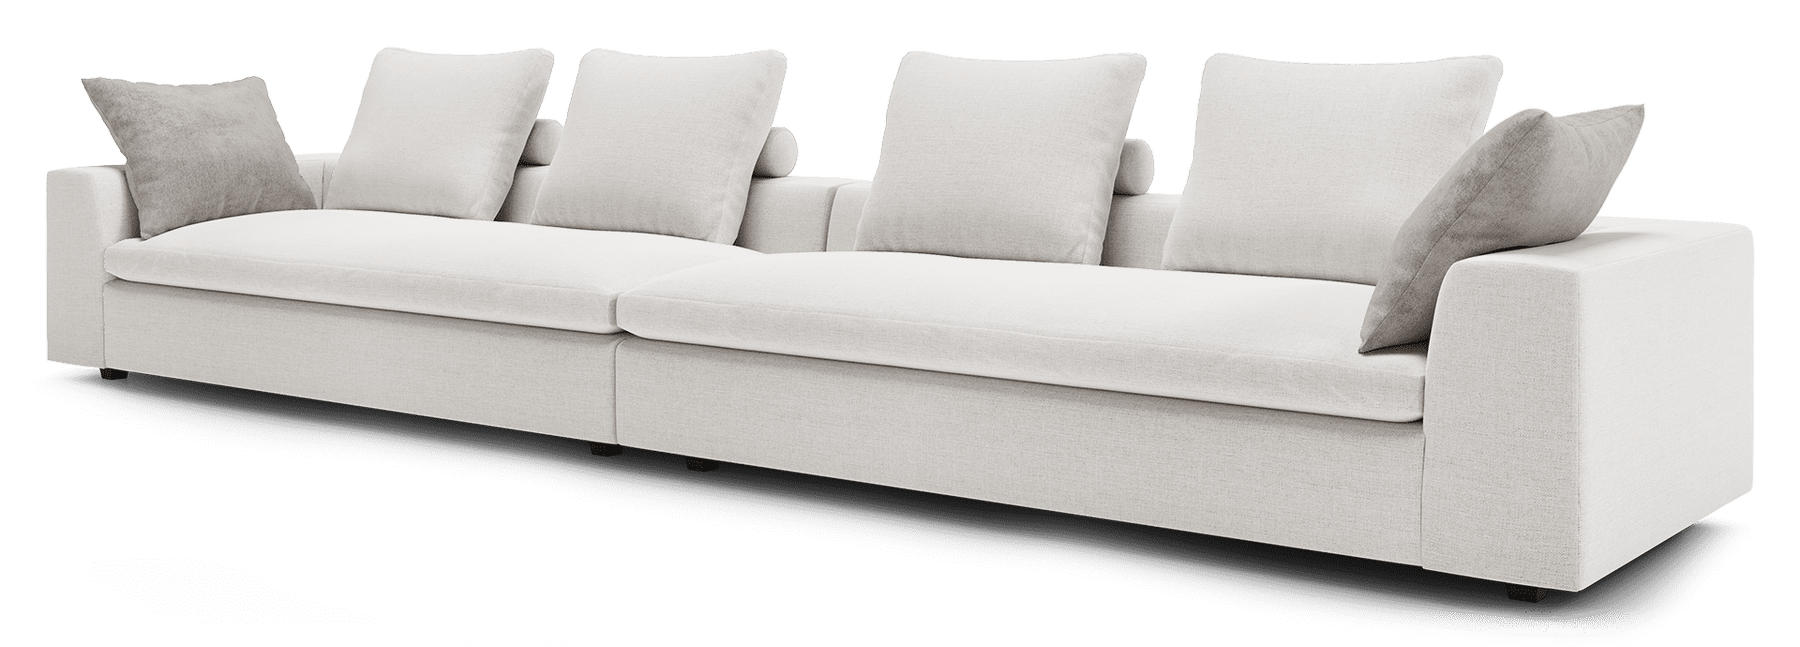 Lucerne Modular Sofa 01